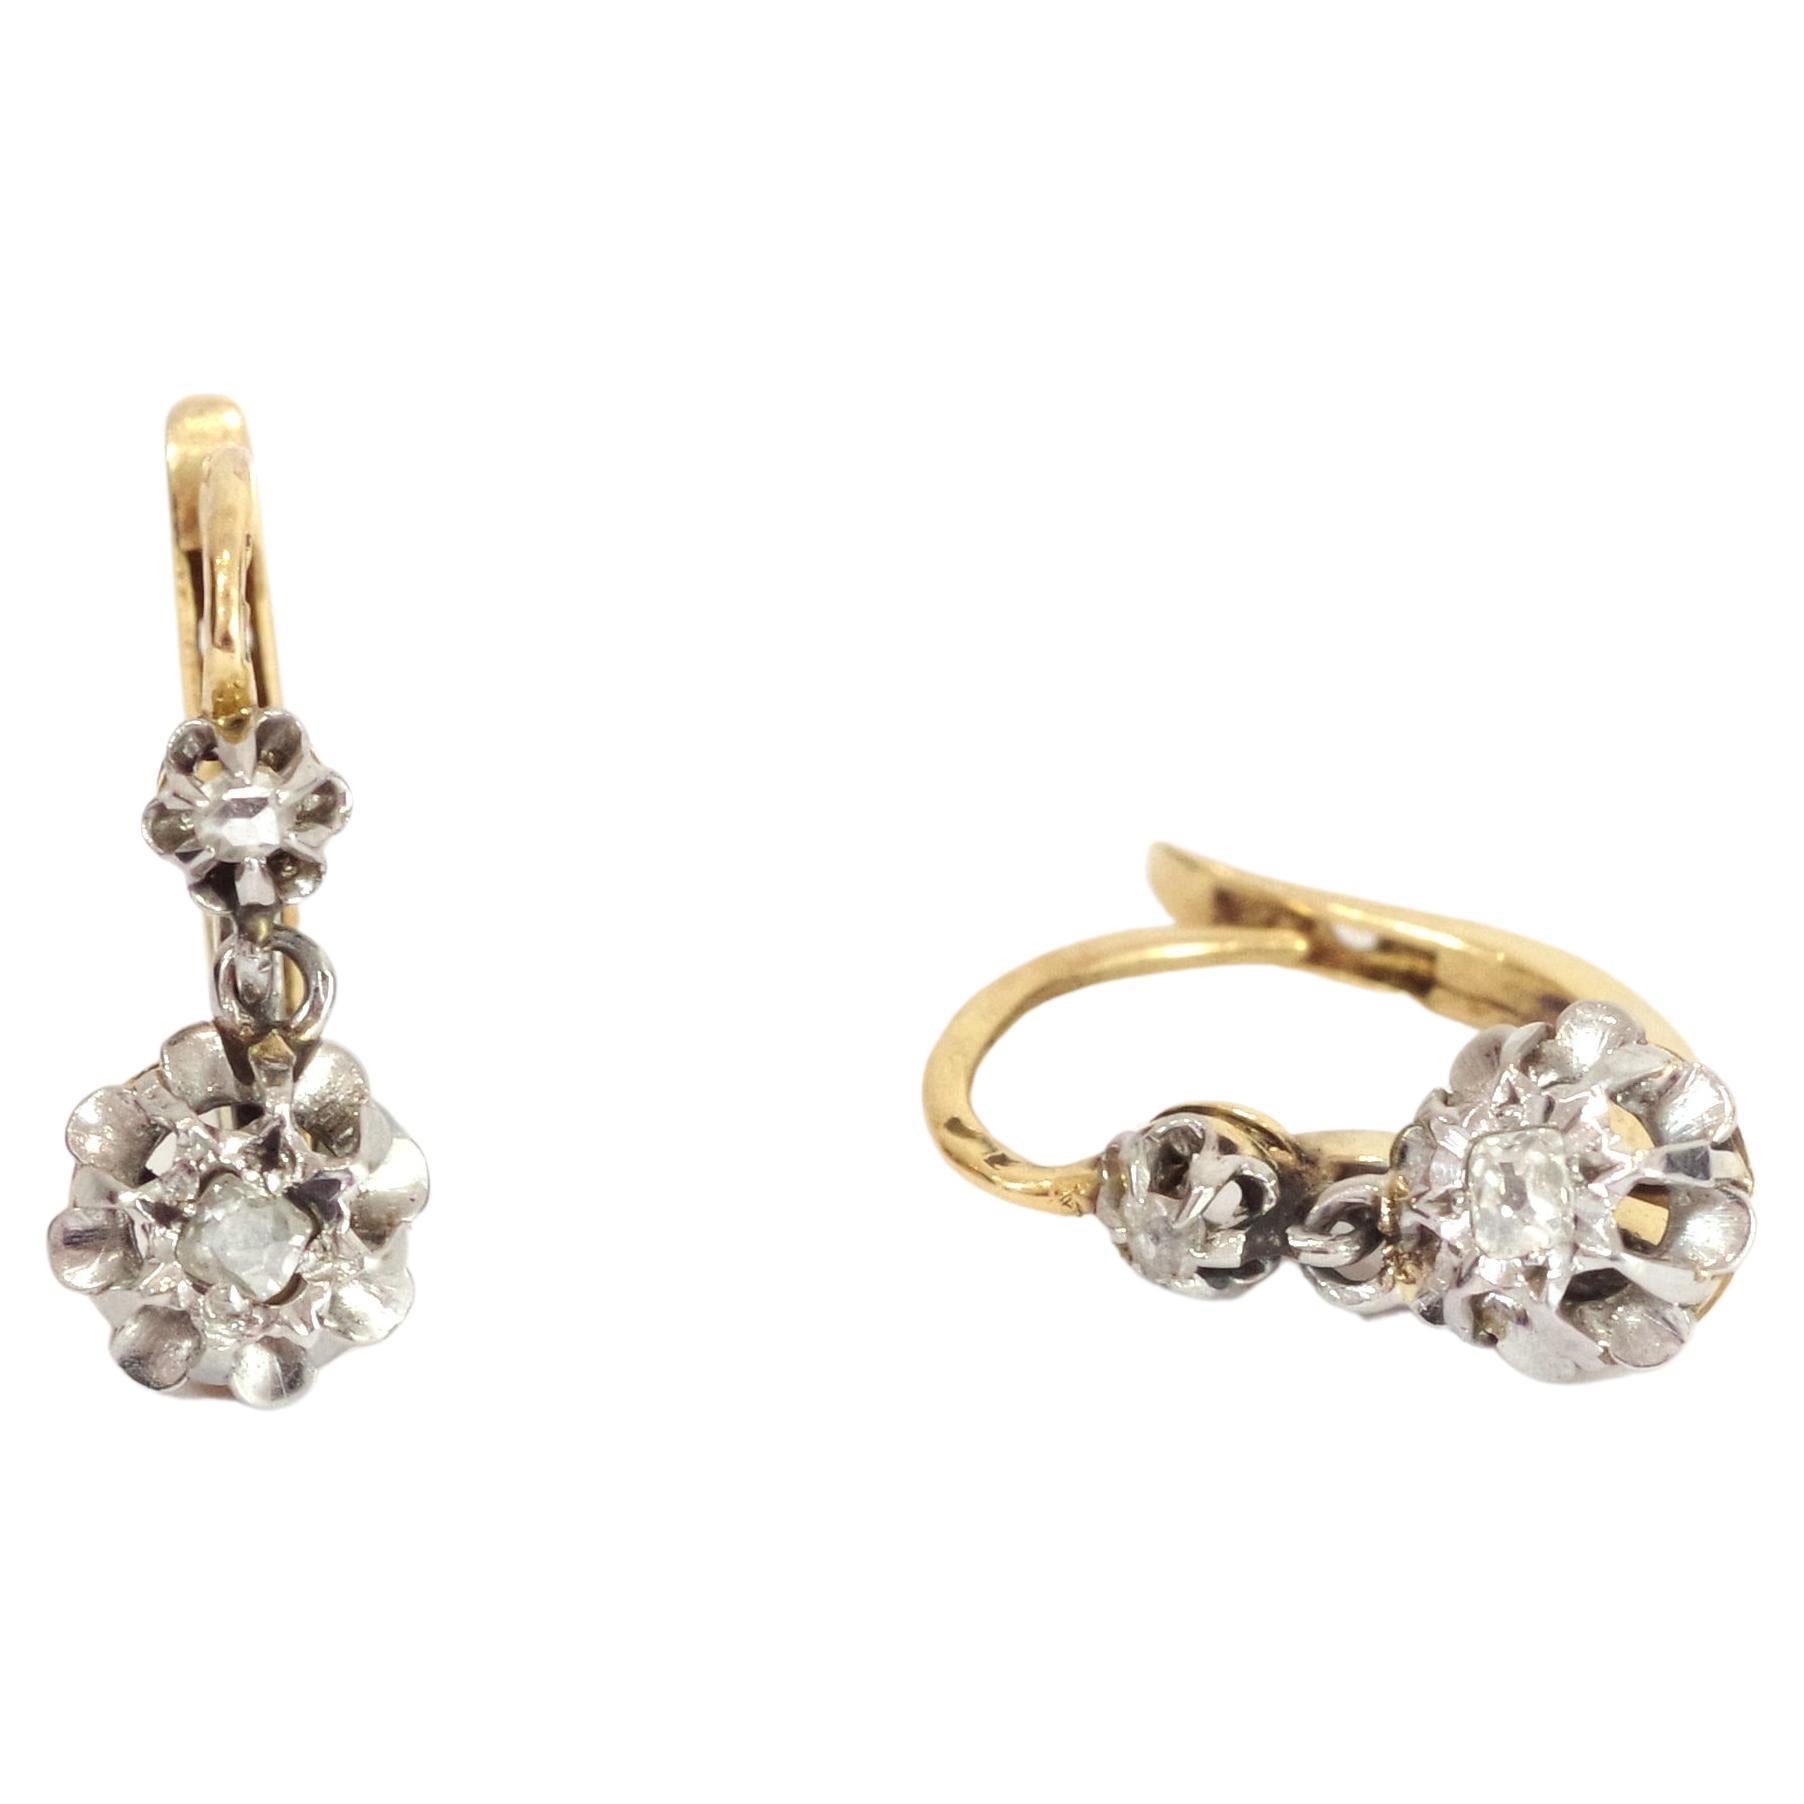 Art Deco 18k Gold & Diamond Earrings | Authentic & Vintage | ReSEE